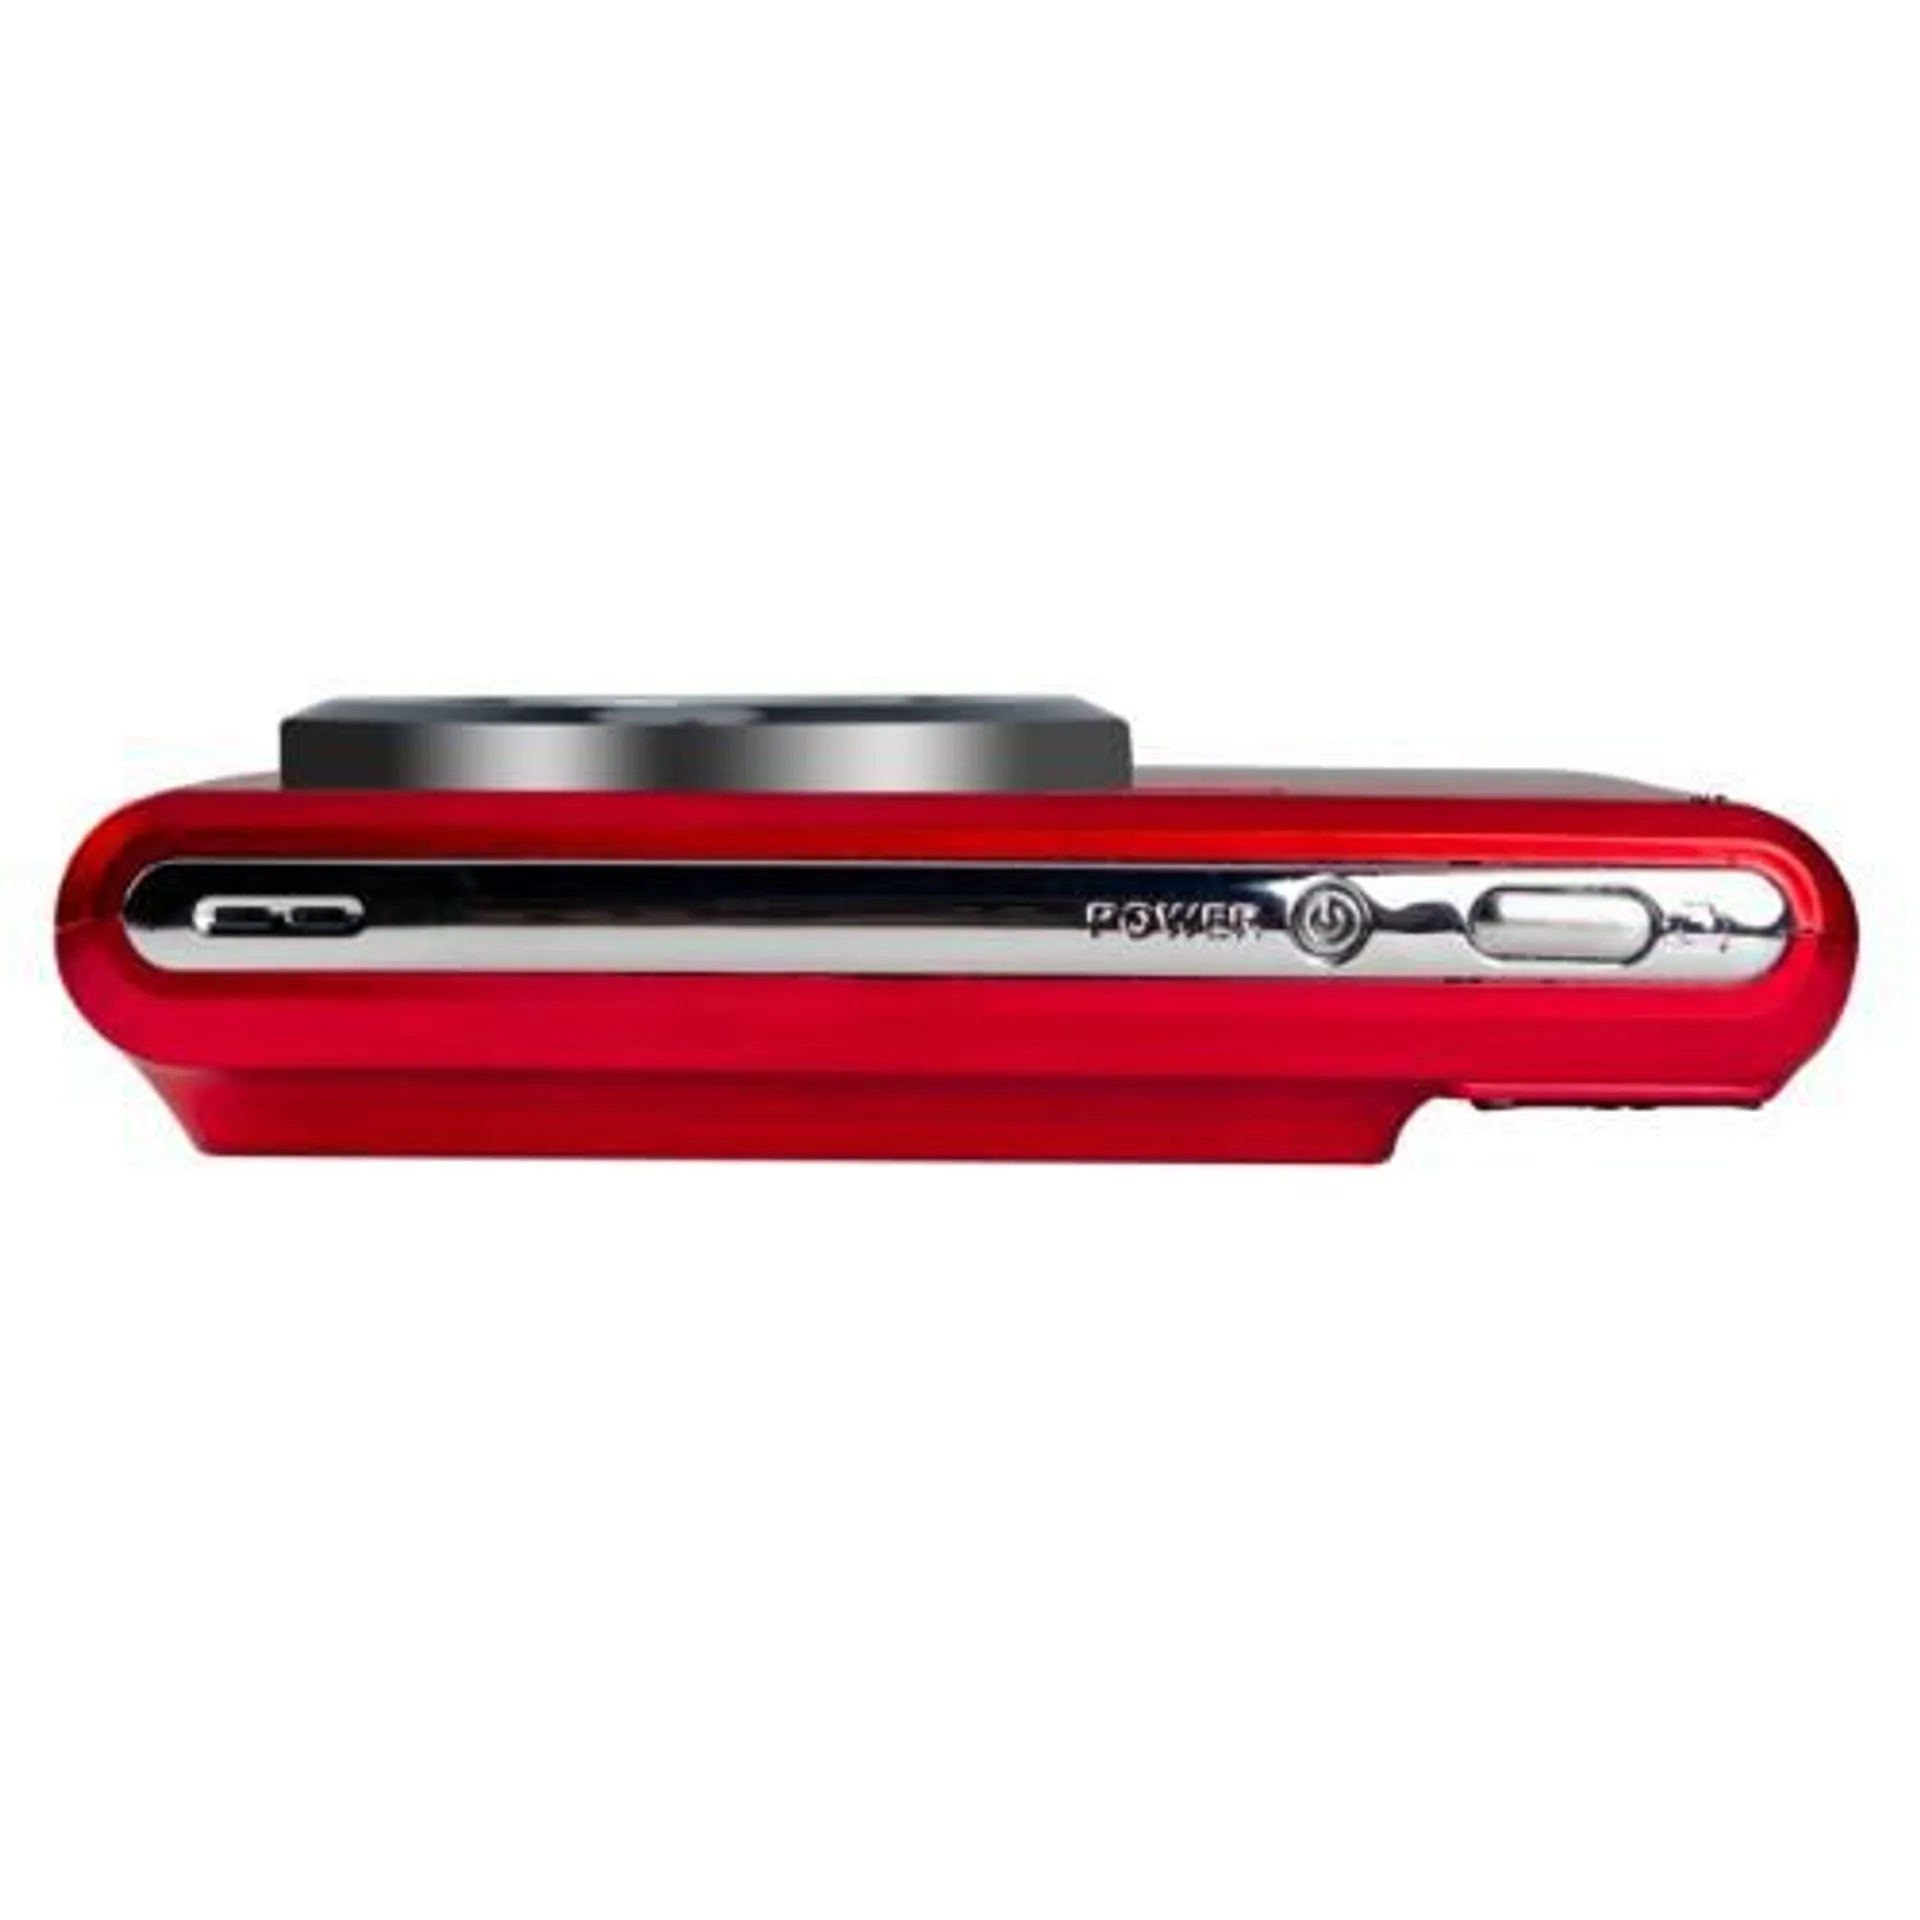 Agfaphoto Realishot DC5200 Digital Camera in Red